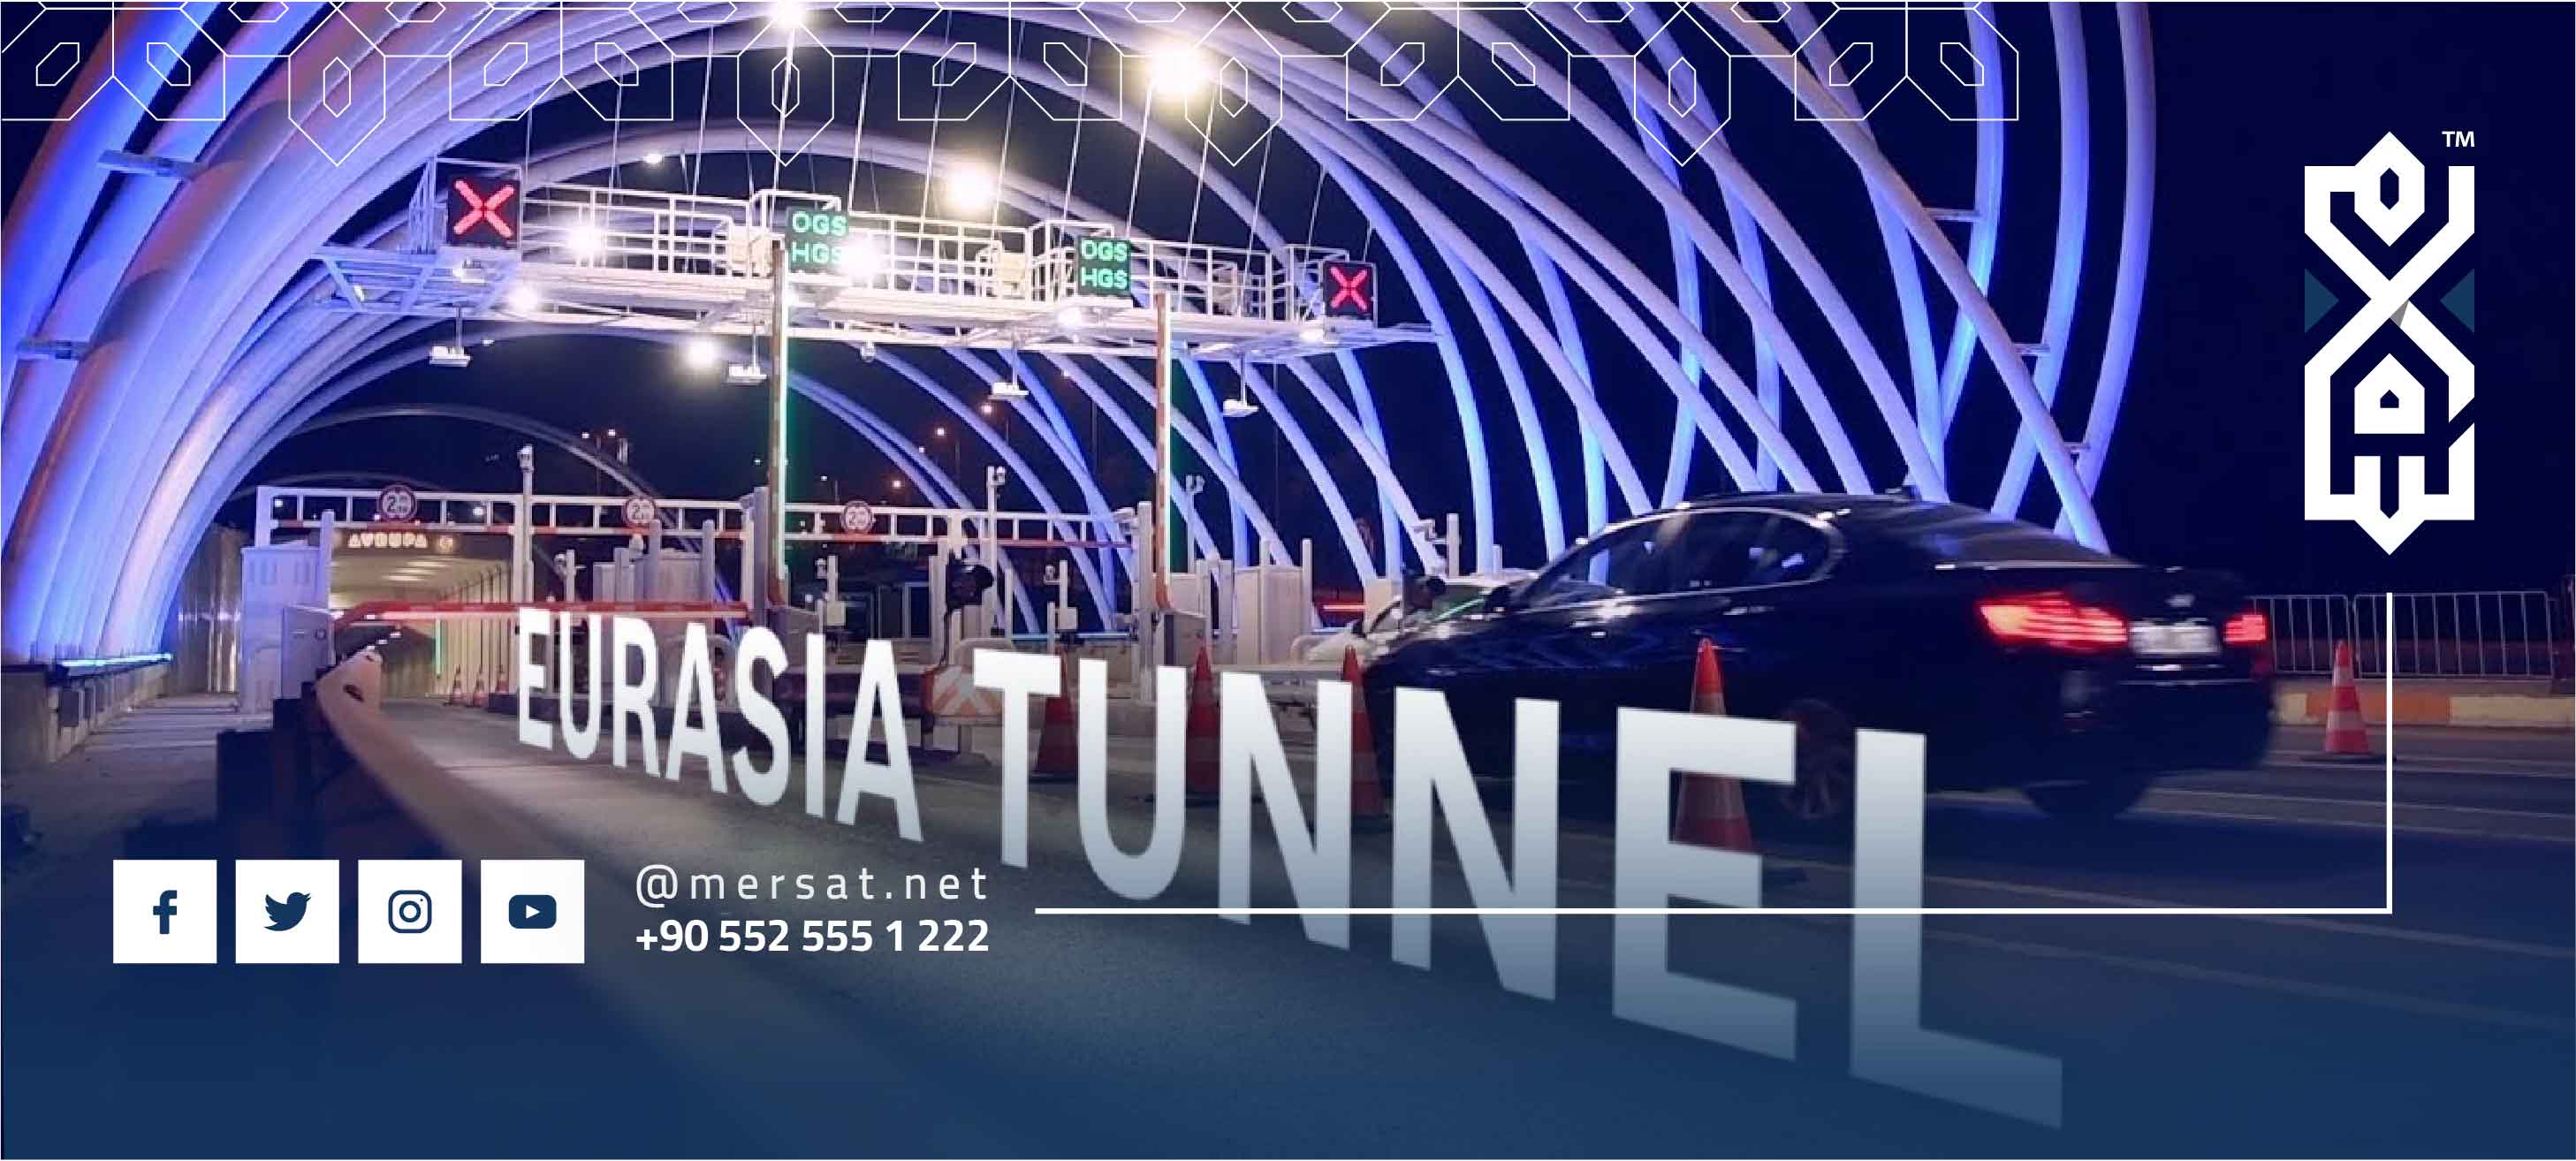 The Eurasia Tunnel